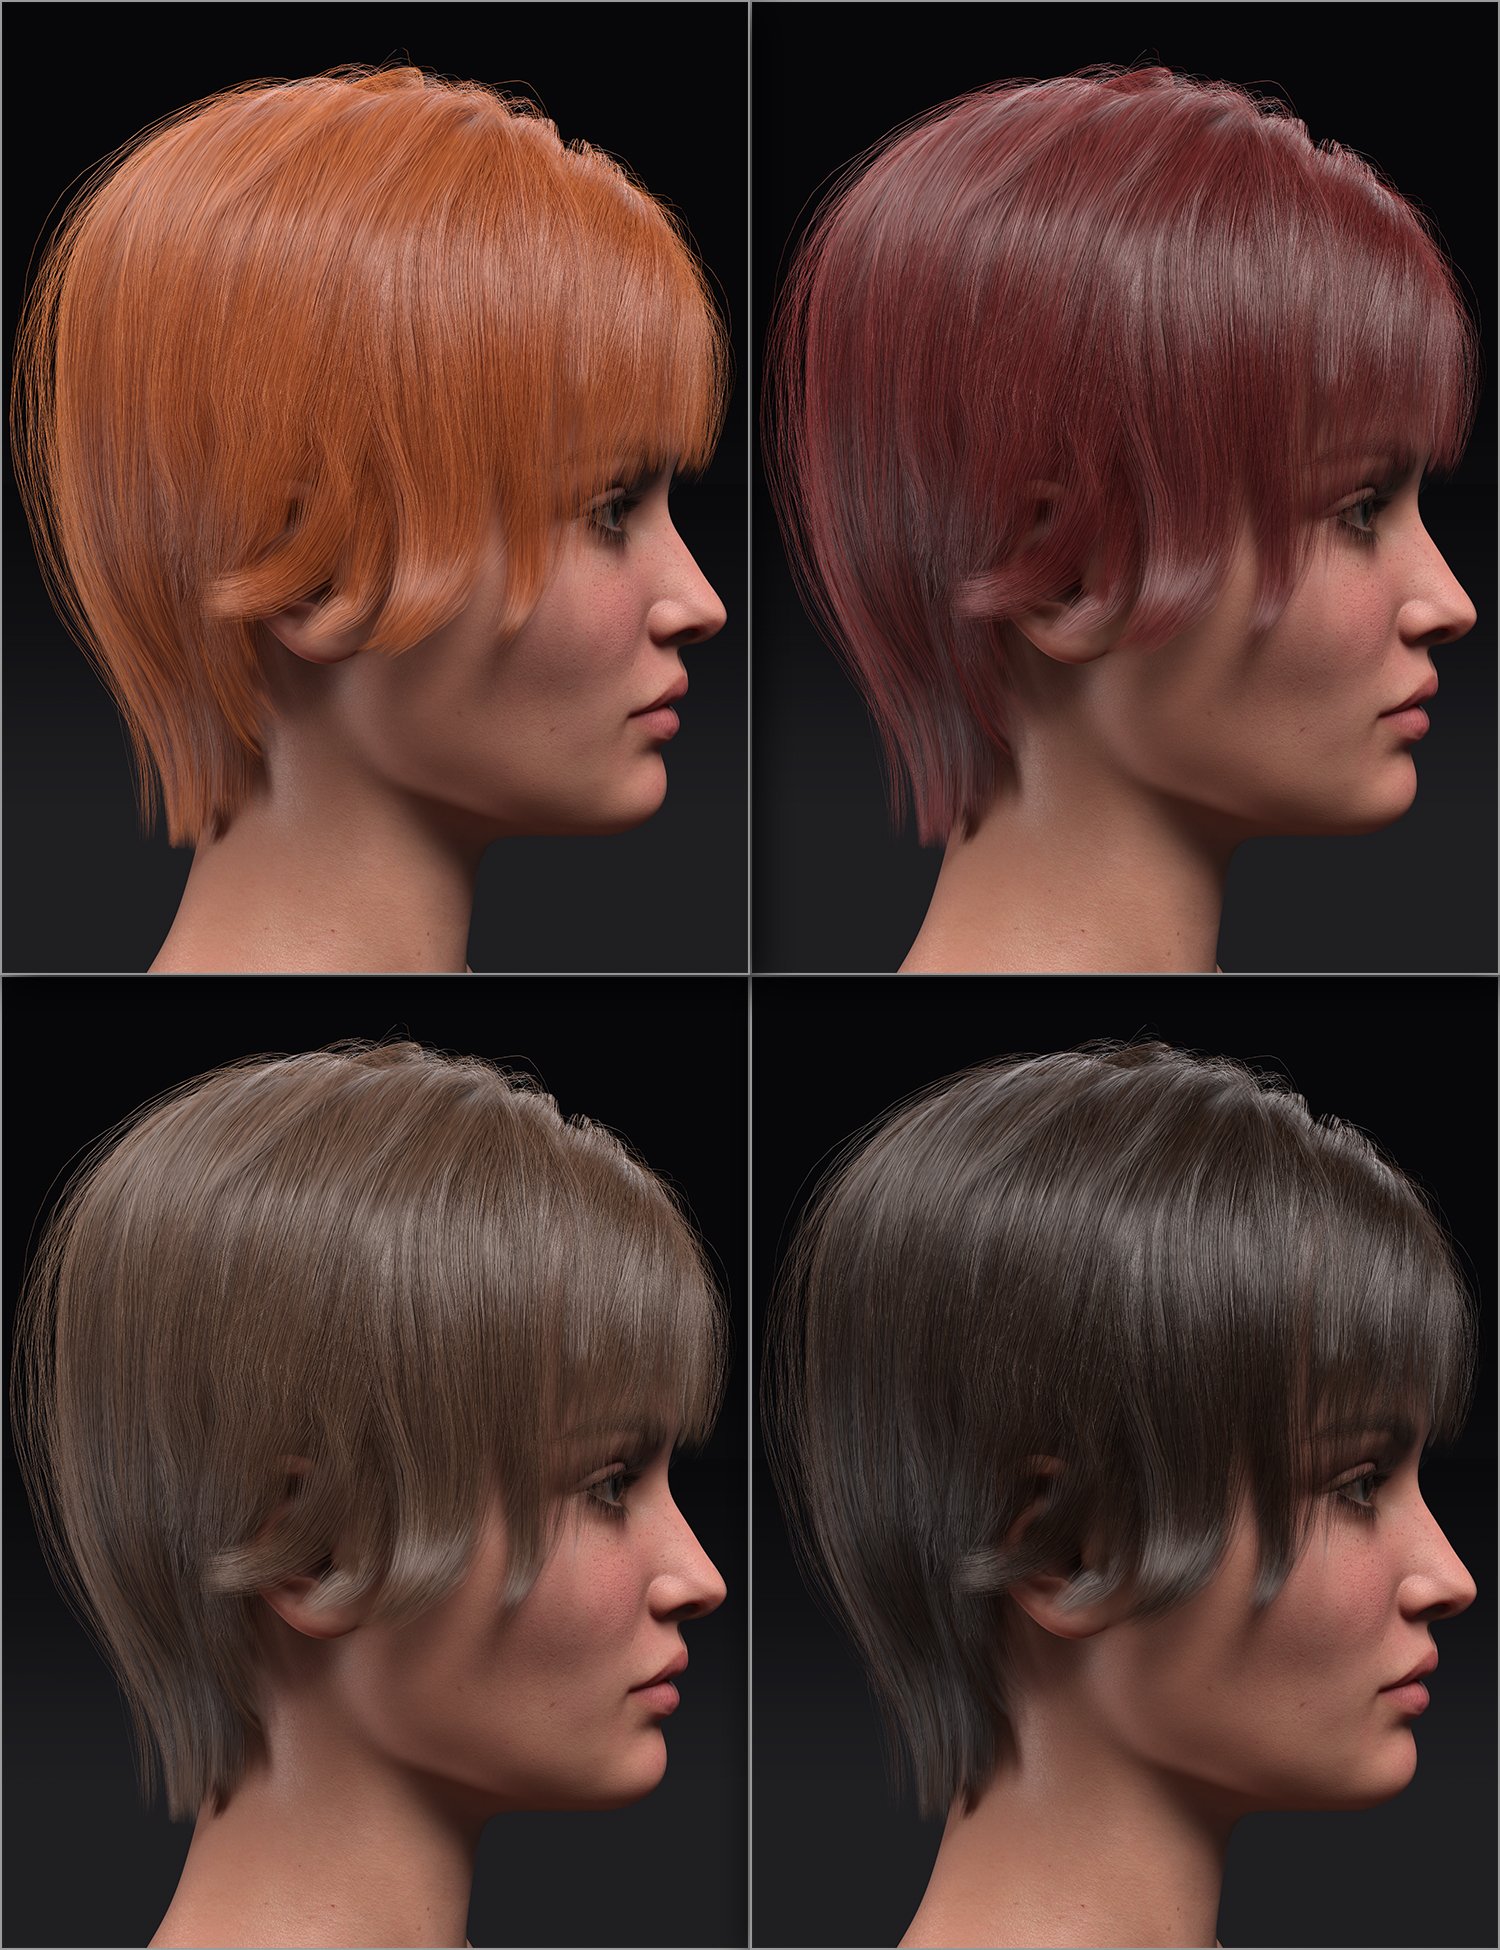 Hong Hair for Genesis 8.1 Female by: Ergou, 3D Models by Daz 3D